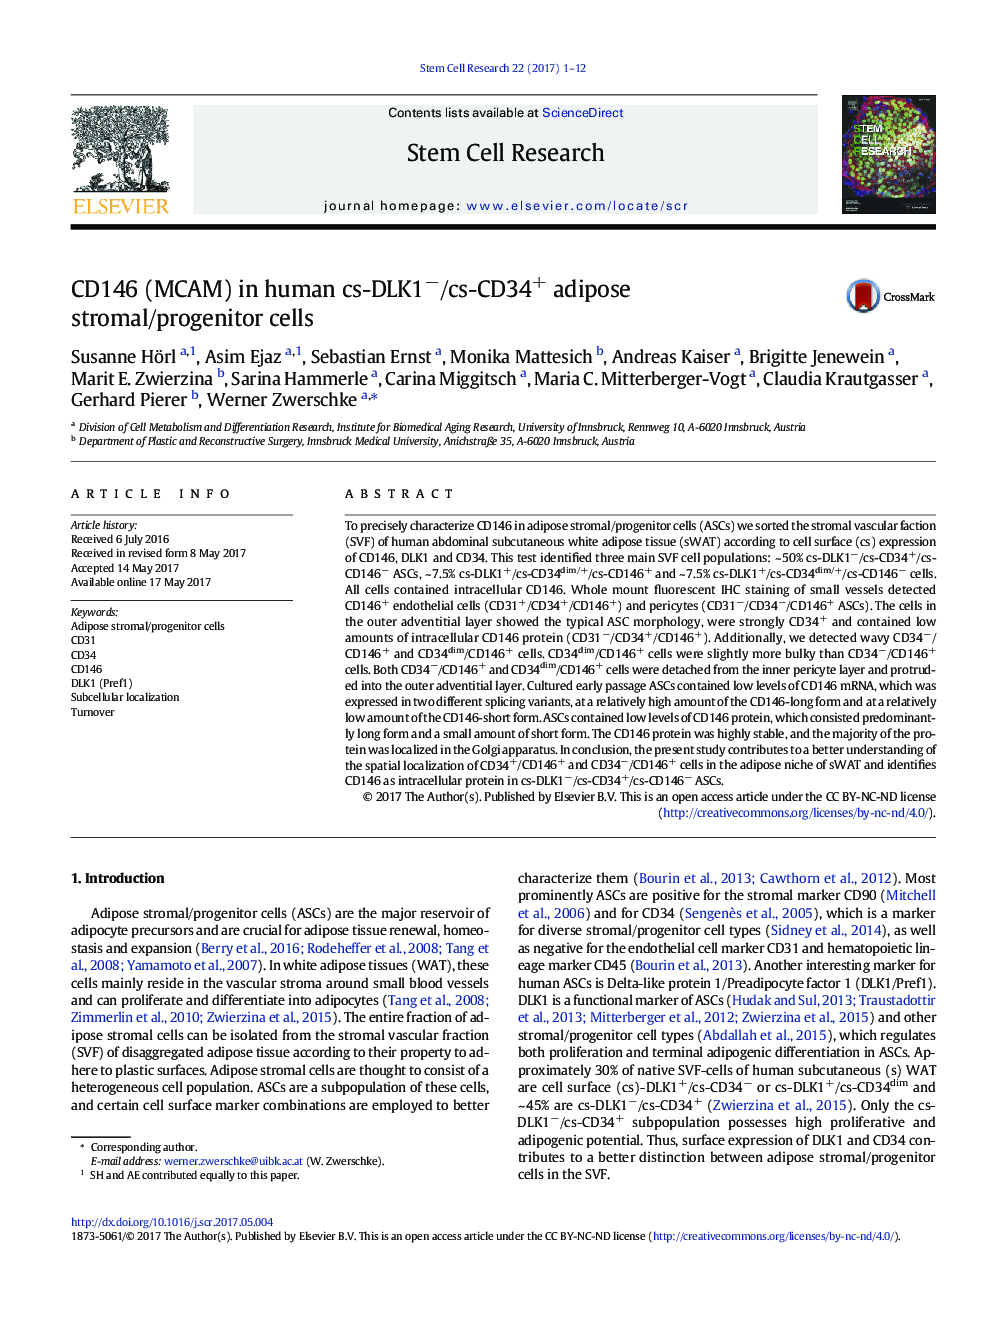 CD146 (MCAM) in human cs-DLK1â/cs-CD34+ adipose stromal/progenitor cells